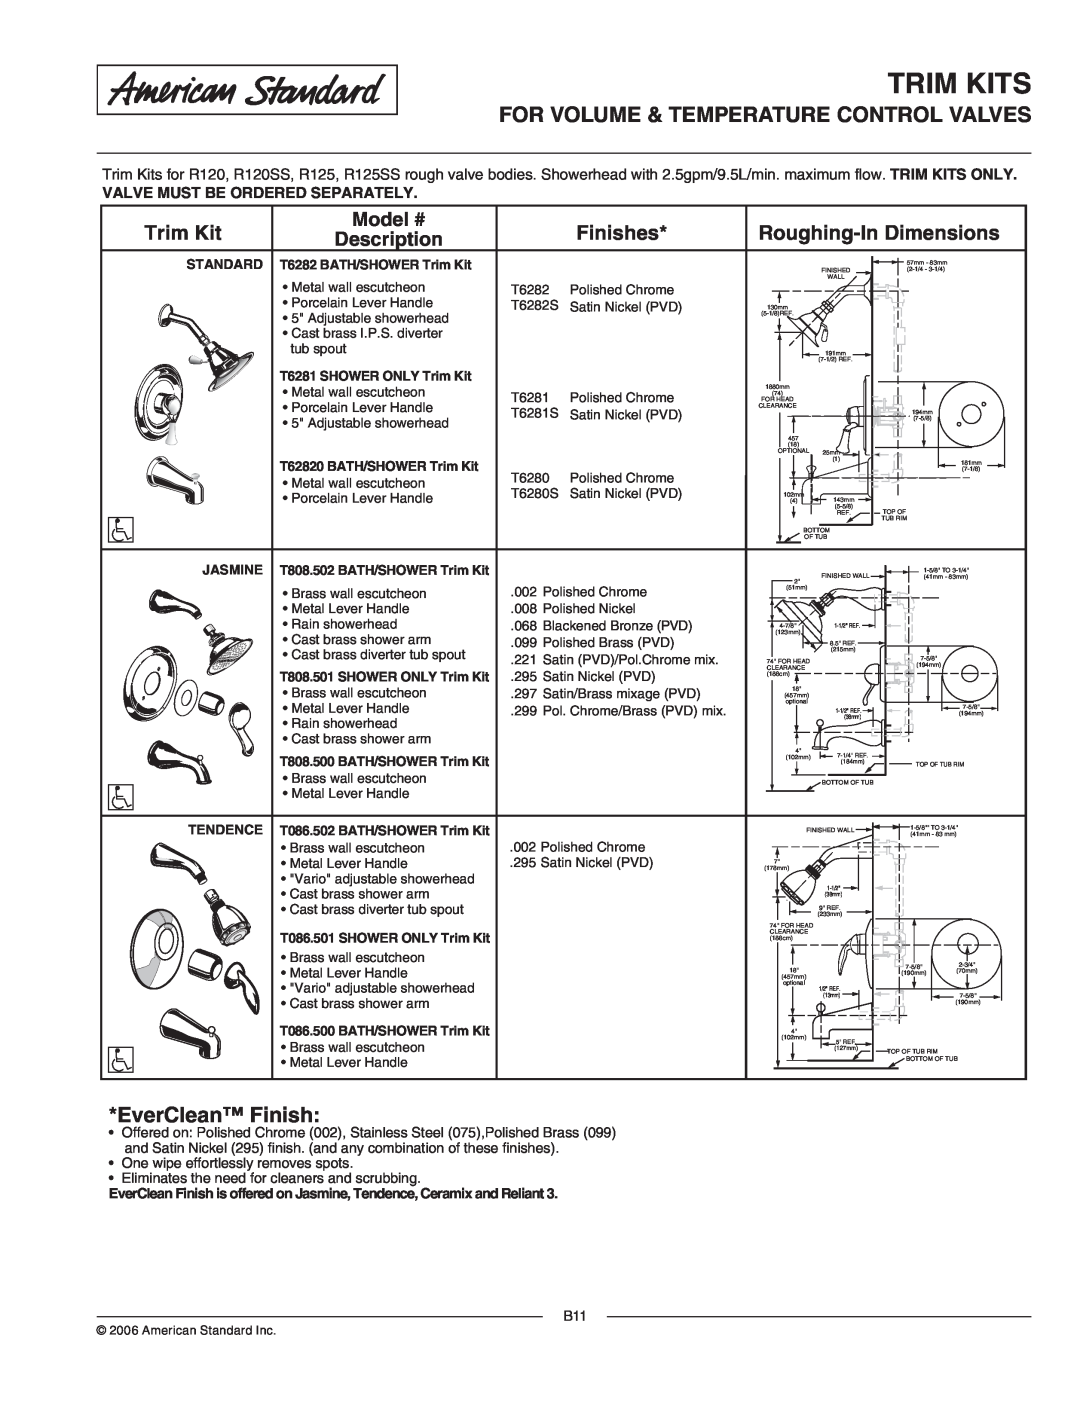 American Standard R125SS, R120 EverClean Finish, Trim Kits, For Volume & Temperature Control Valves, Finishes, Description 